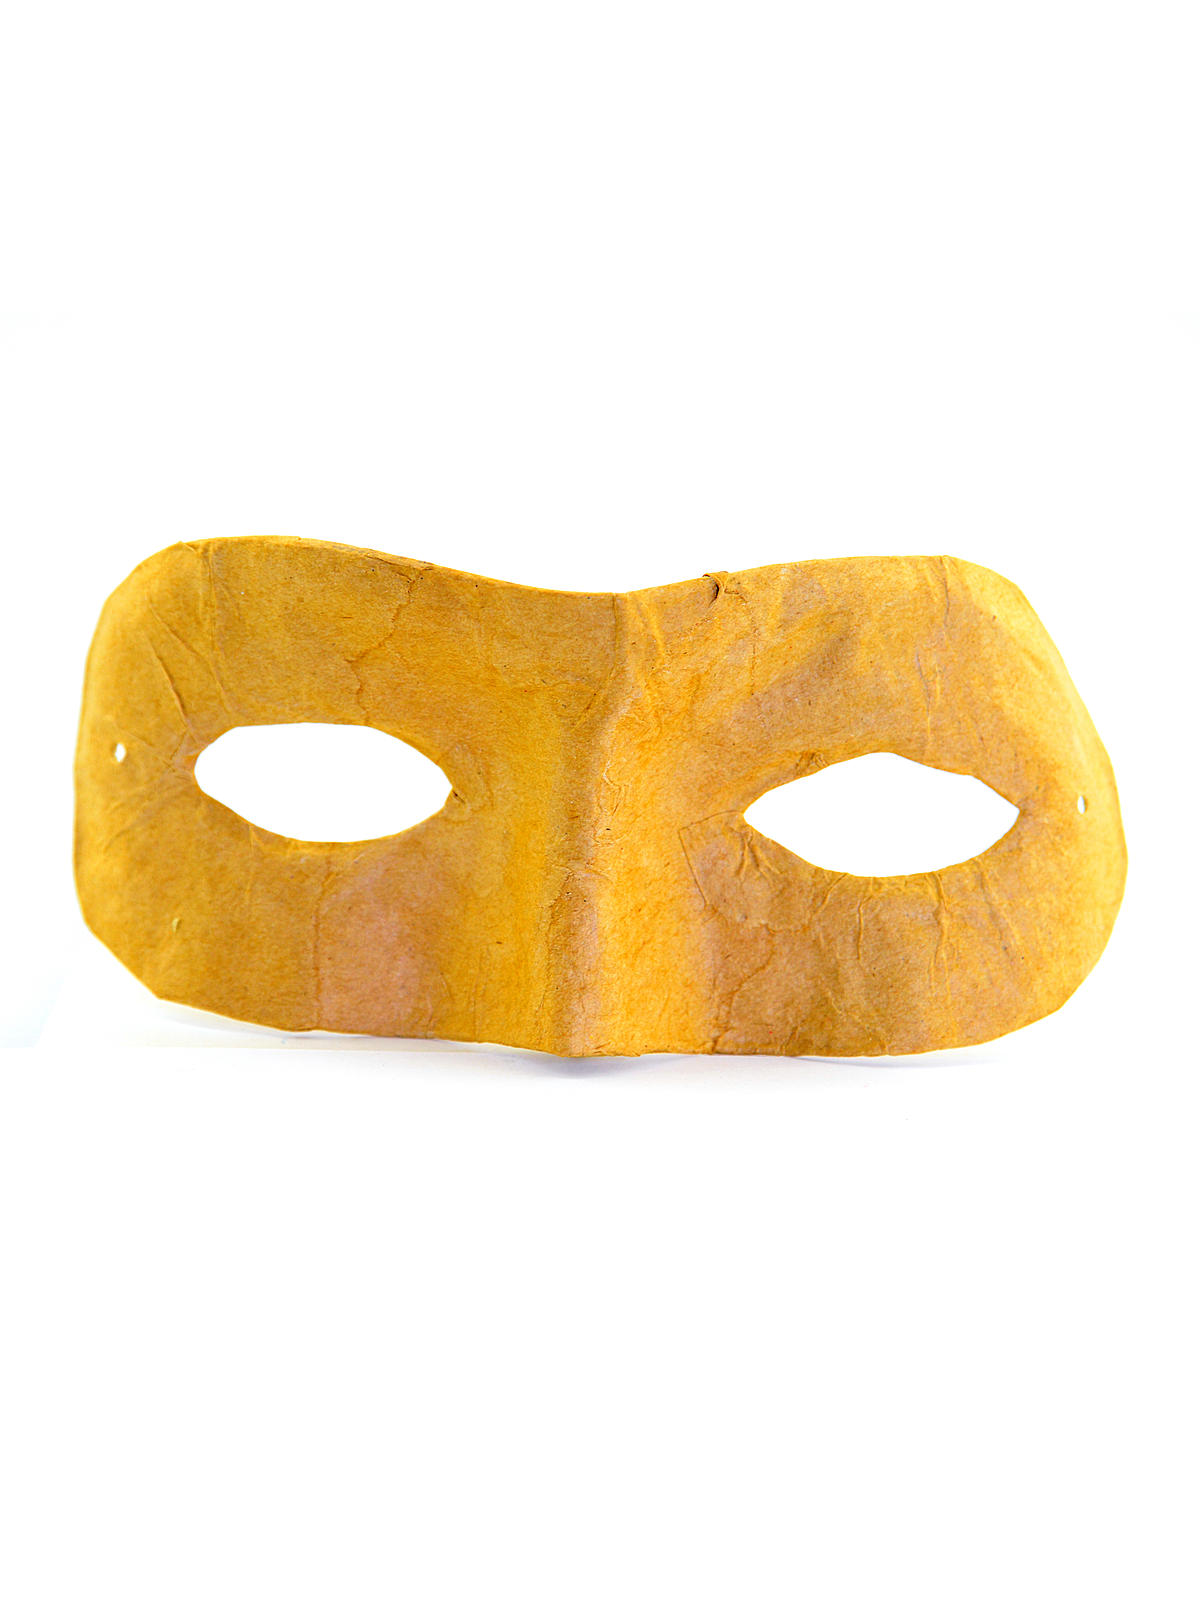 Creativity Street Paper Mache Masks Half Mask 2 3 4 In. X 6 In. Each